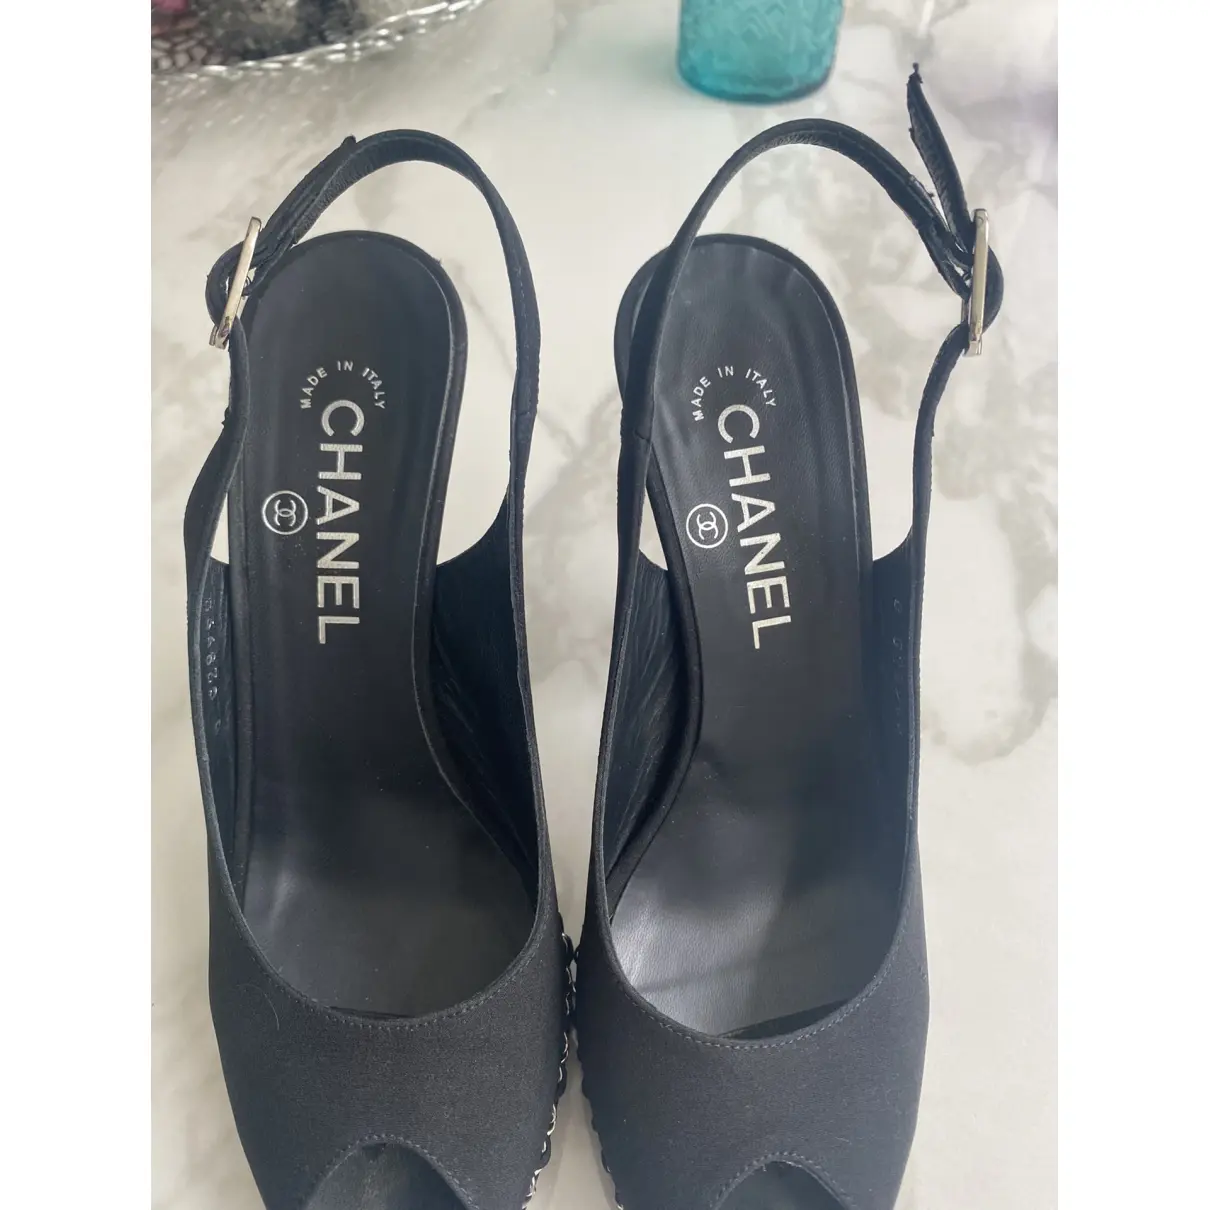 Buy Chanel Slingback cloth sandal online